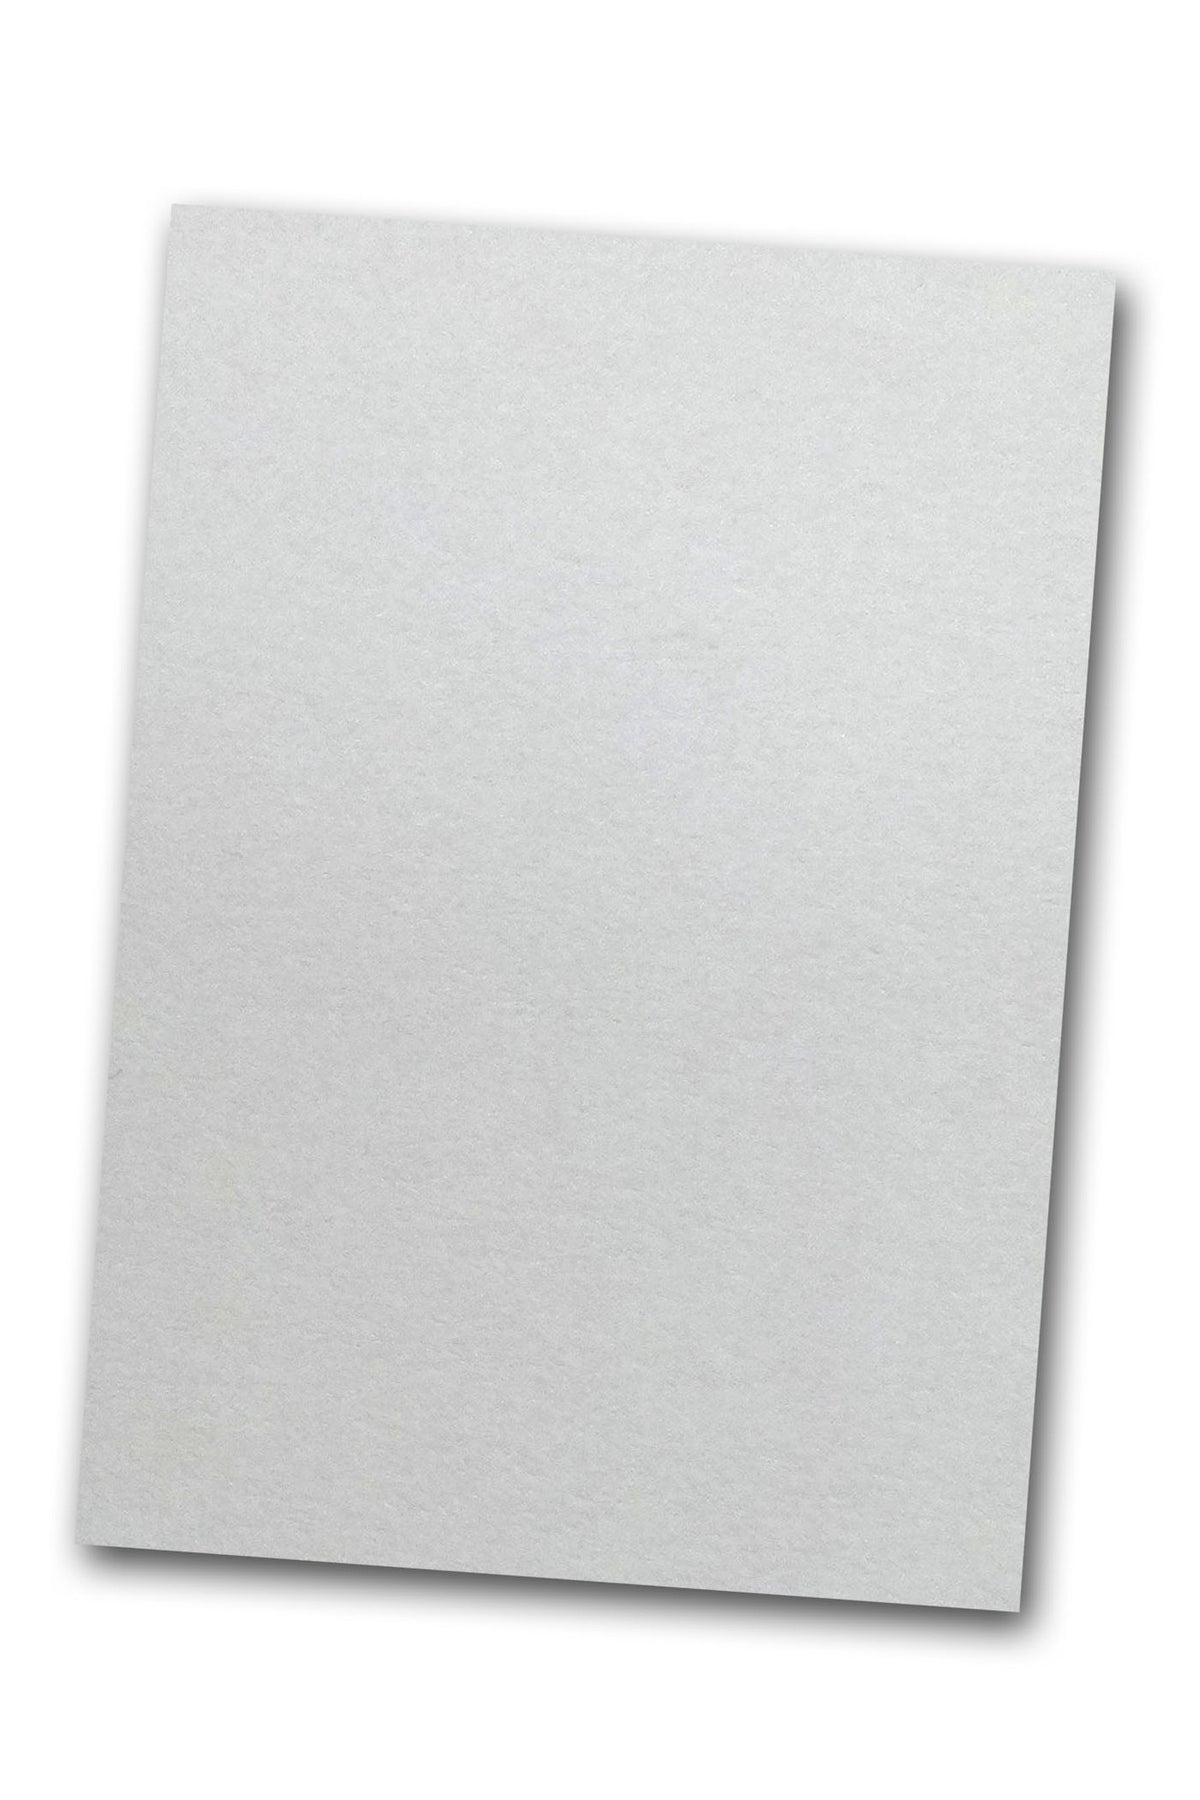 Classic Crest Text Weight Premium Paper for digital printing - CutCardStock